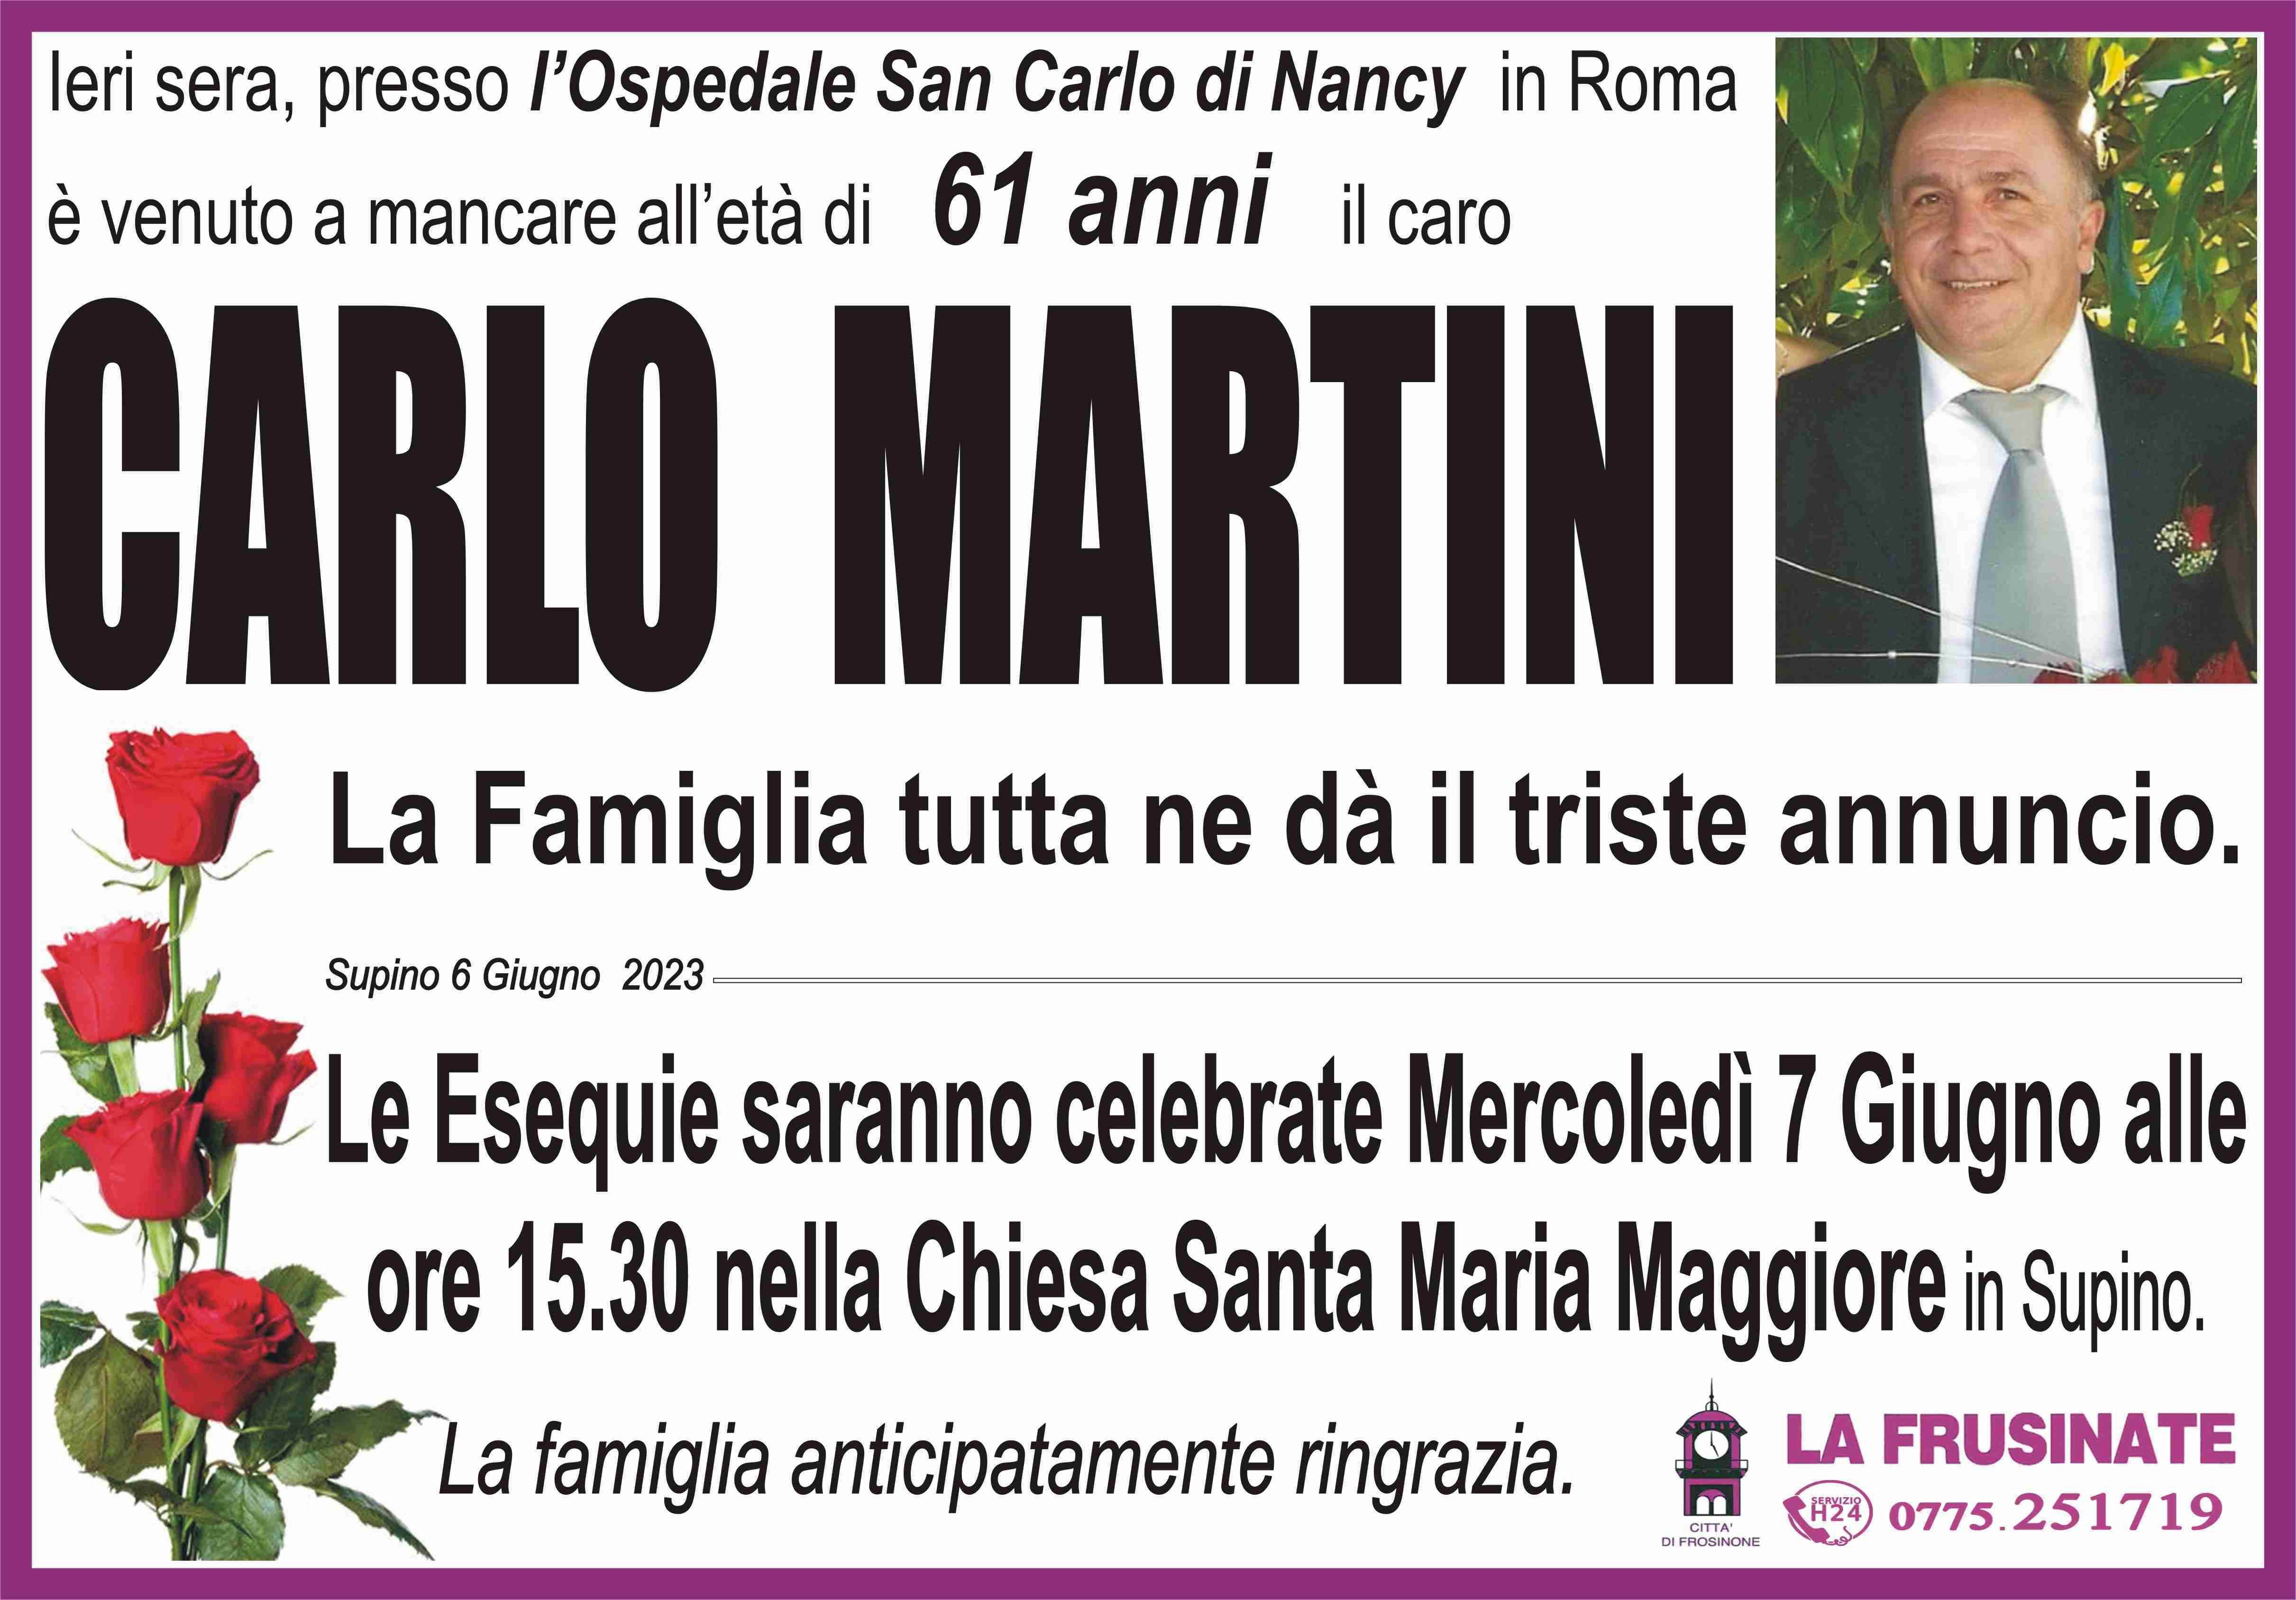 Carlo Martini